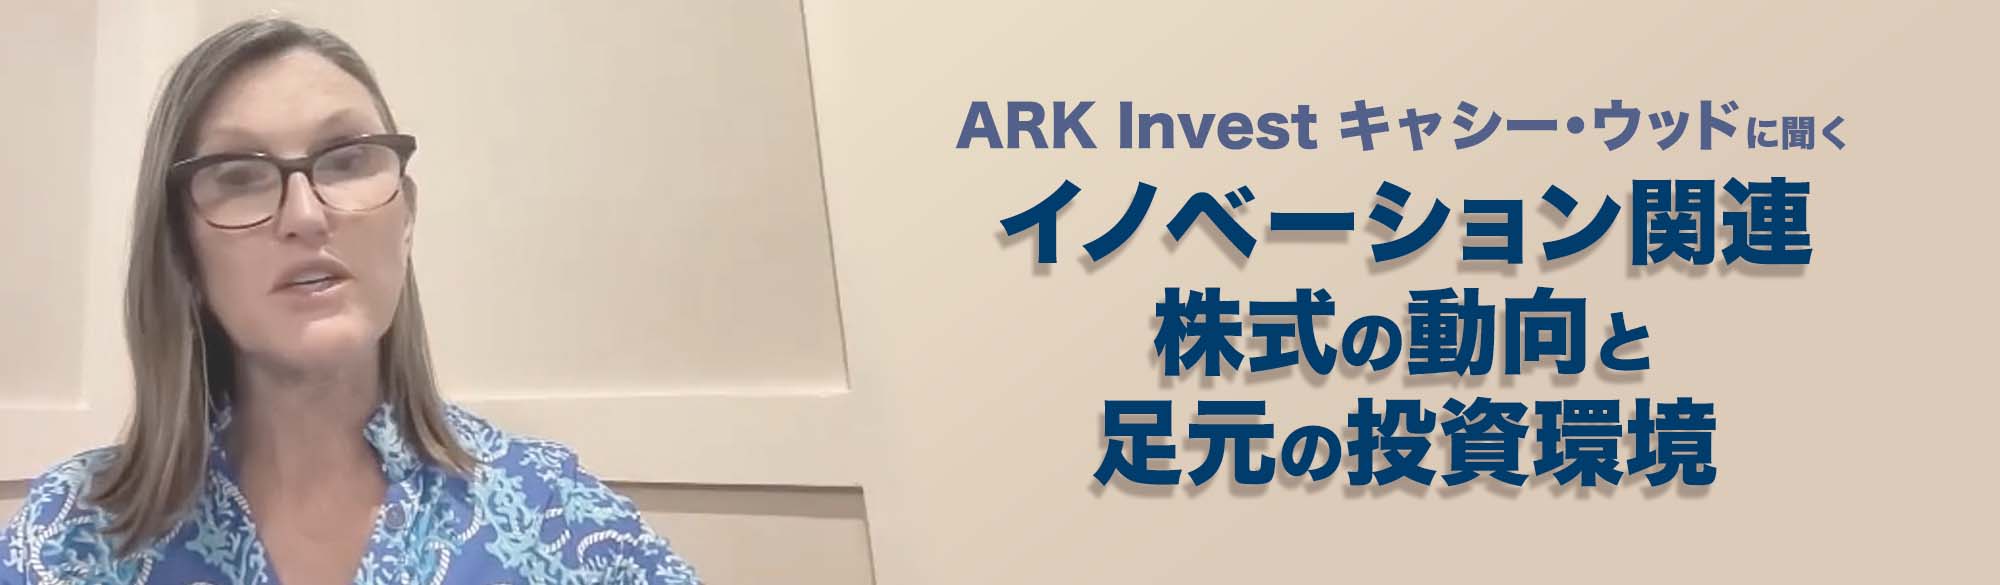 ARK Invest キャシー・ウッドに聞く イノベーション関連株式の動向と足元の投資環境